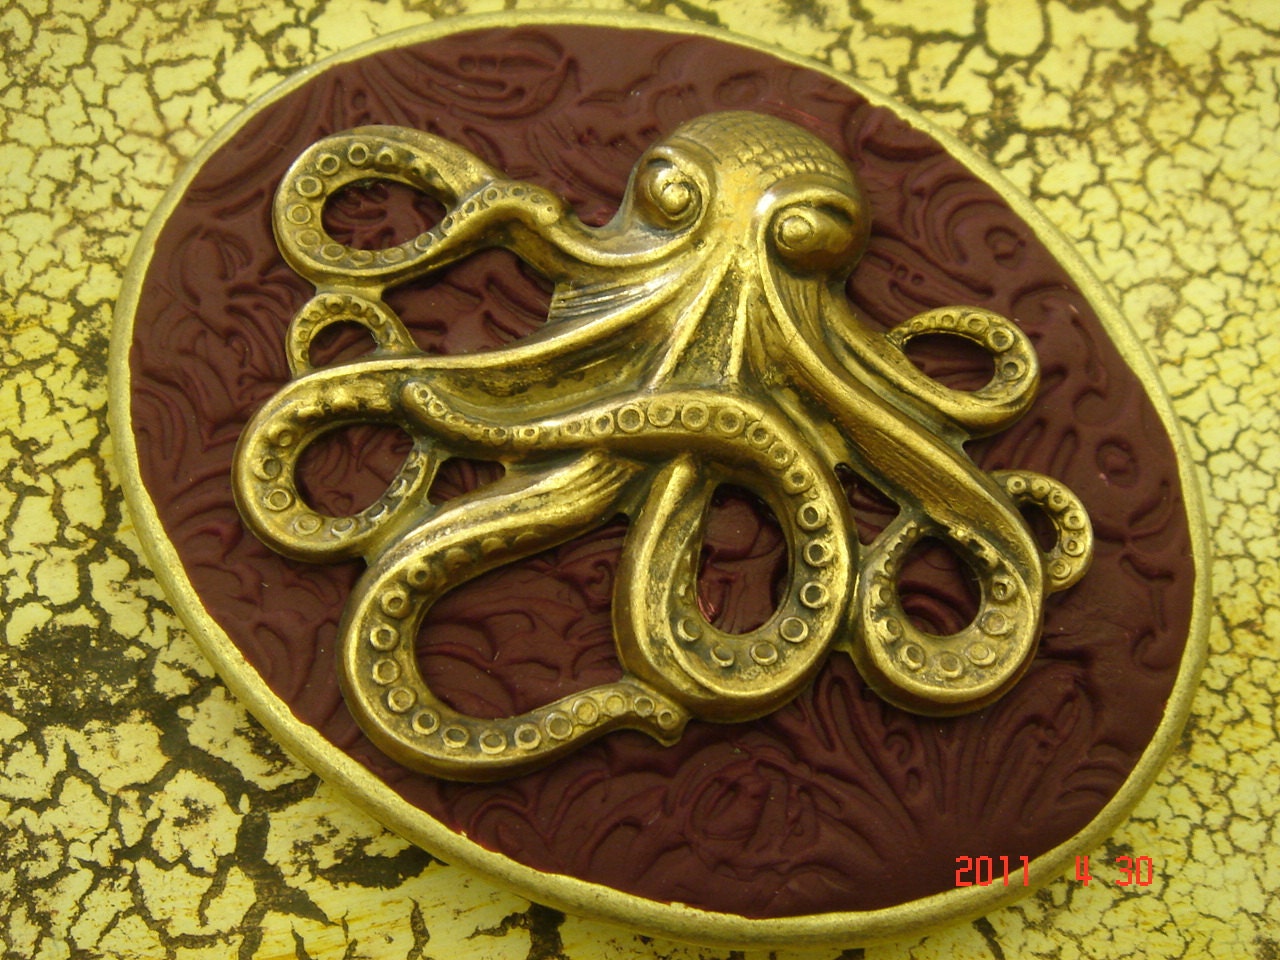 Octopus Belt